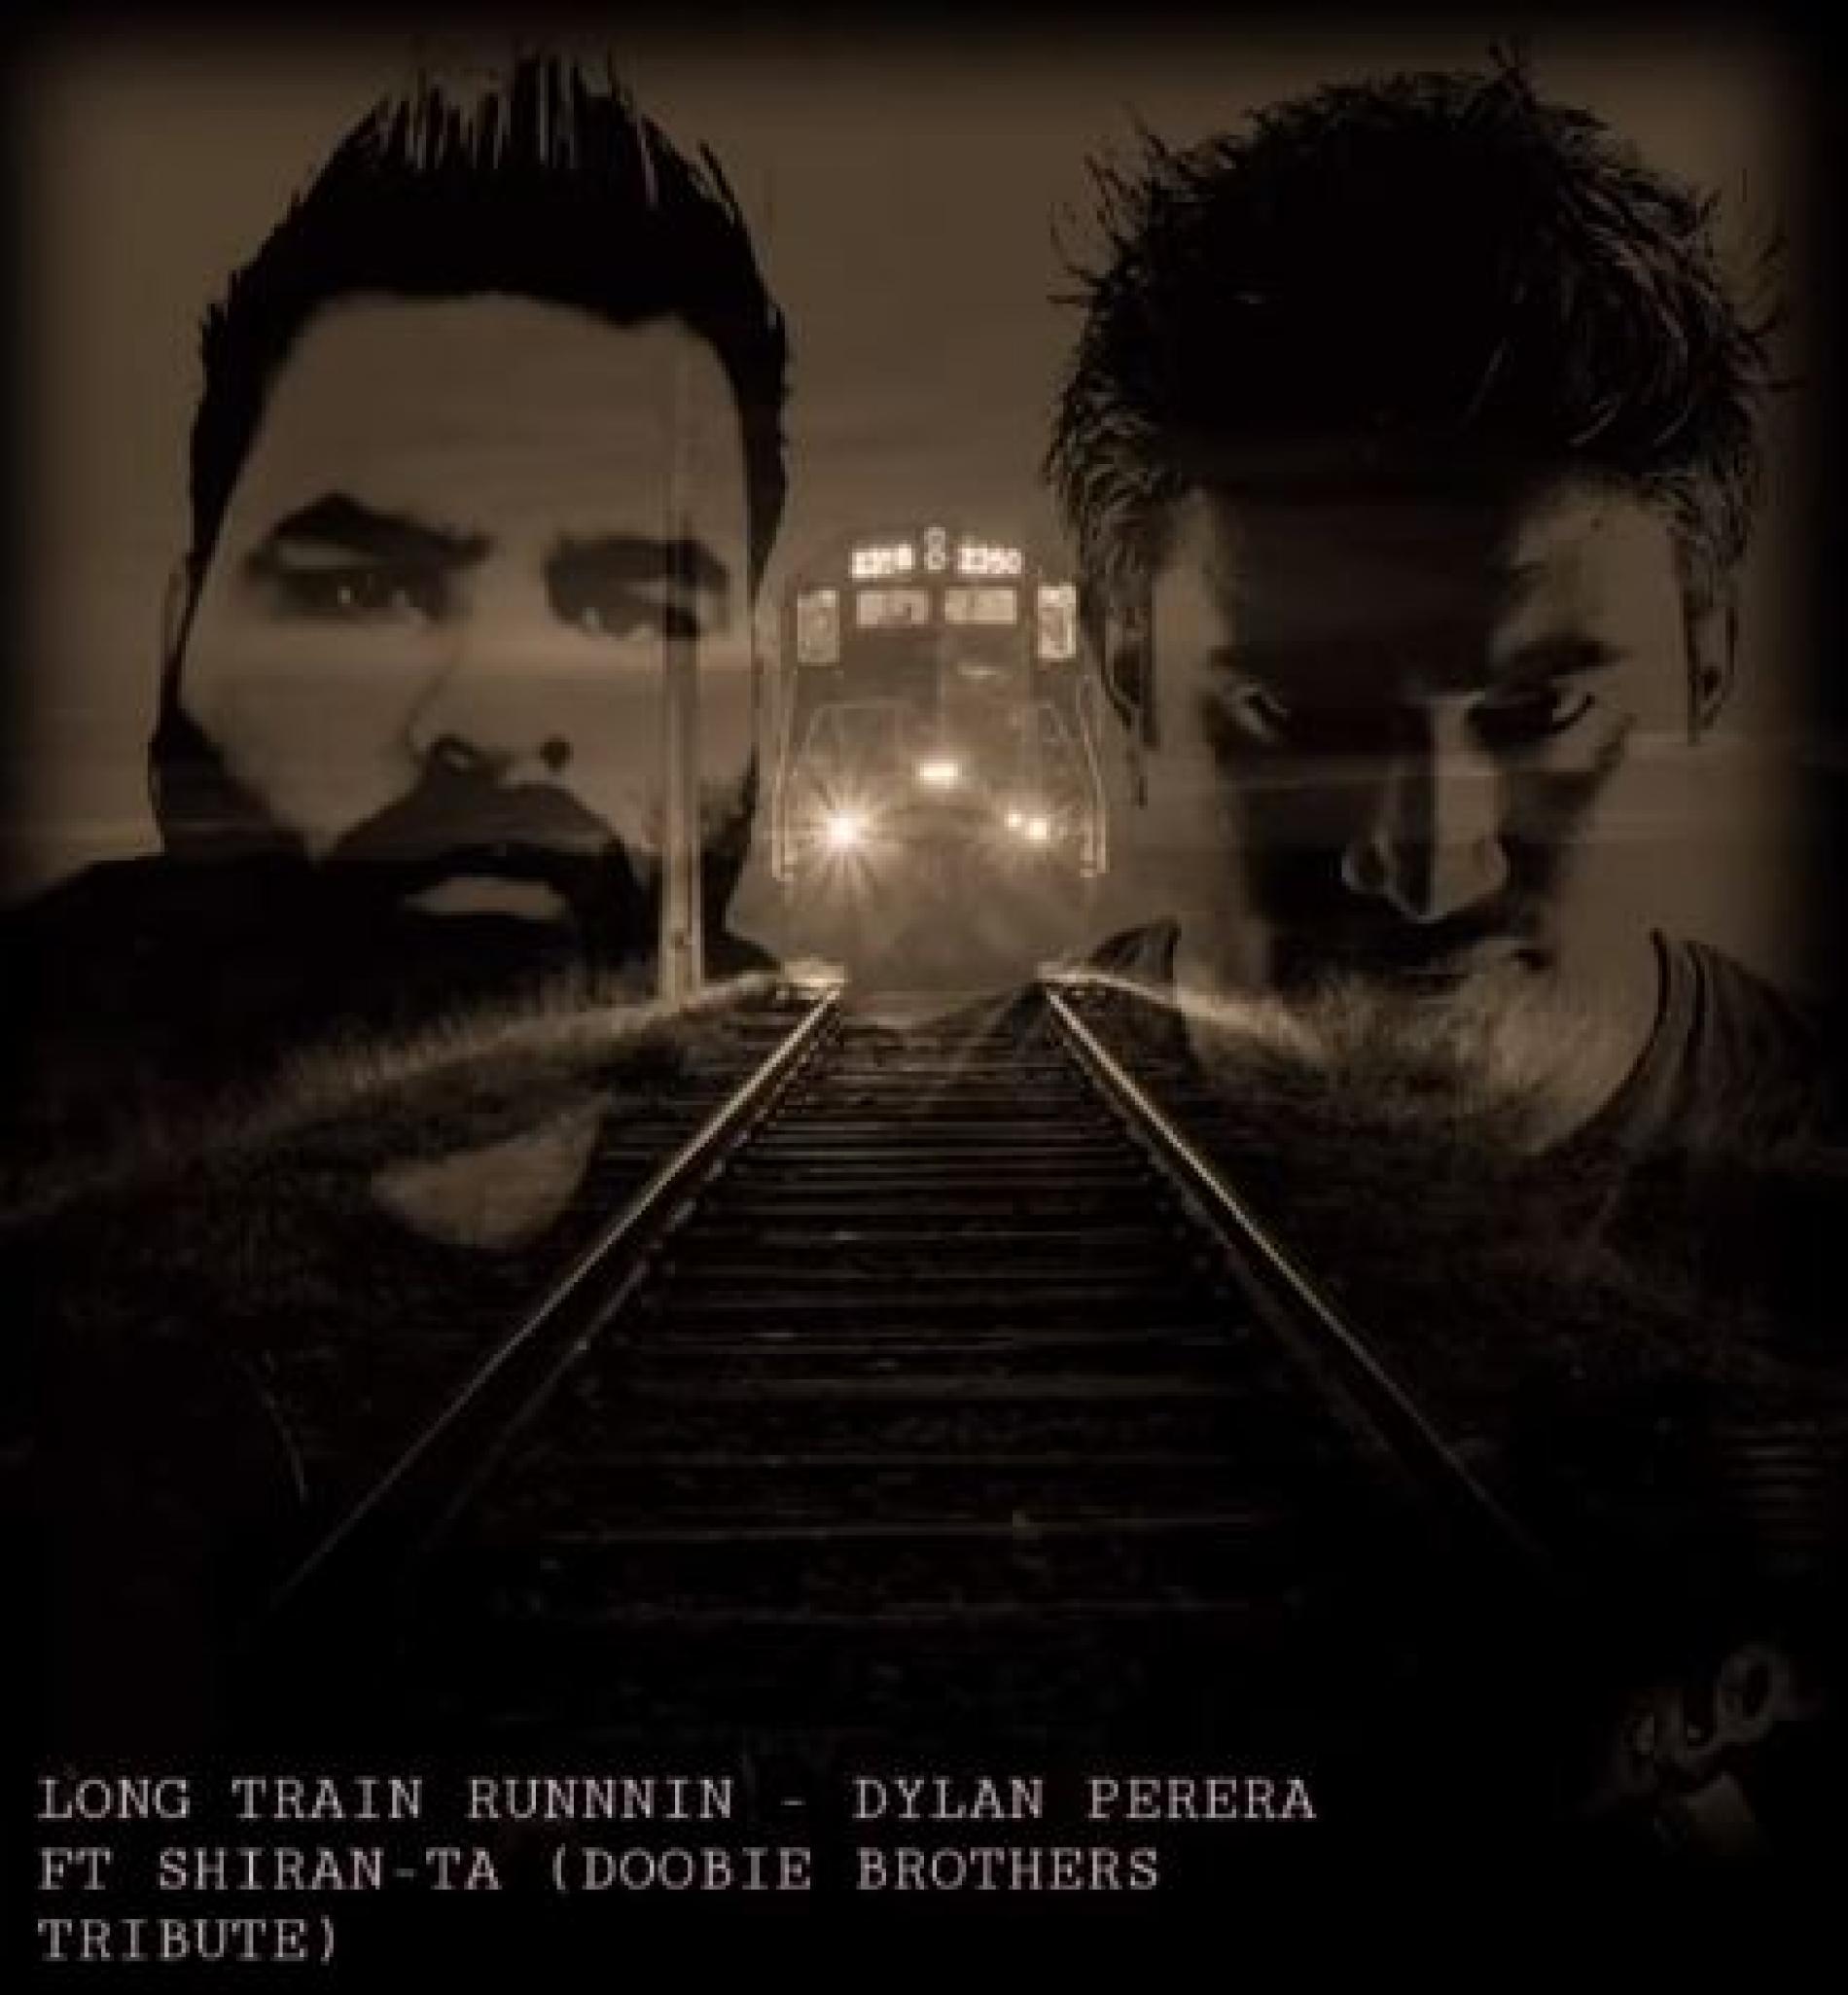 New Music : Long Train Runnin – Dylan Perera ft Shiran-ta (Doobie Brothers Tribute)